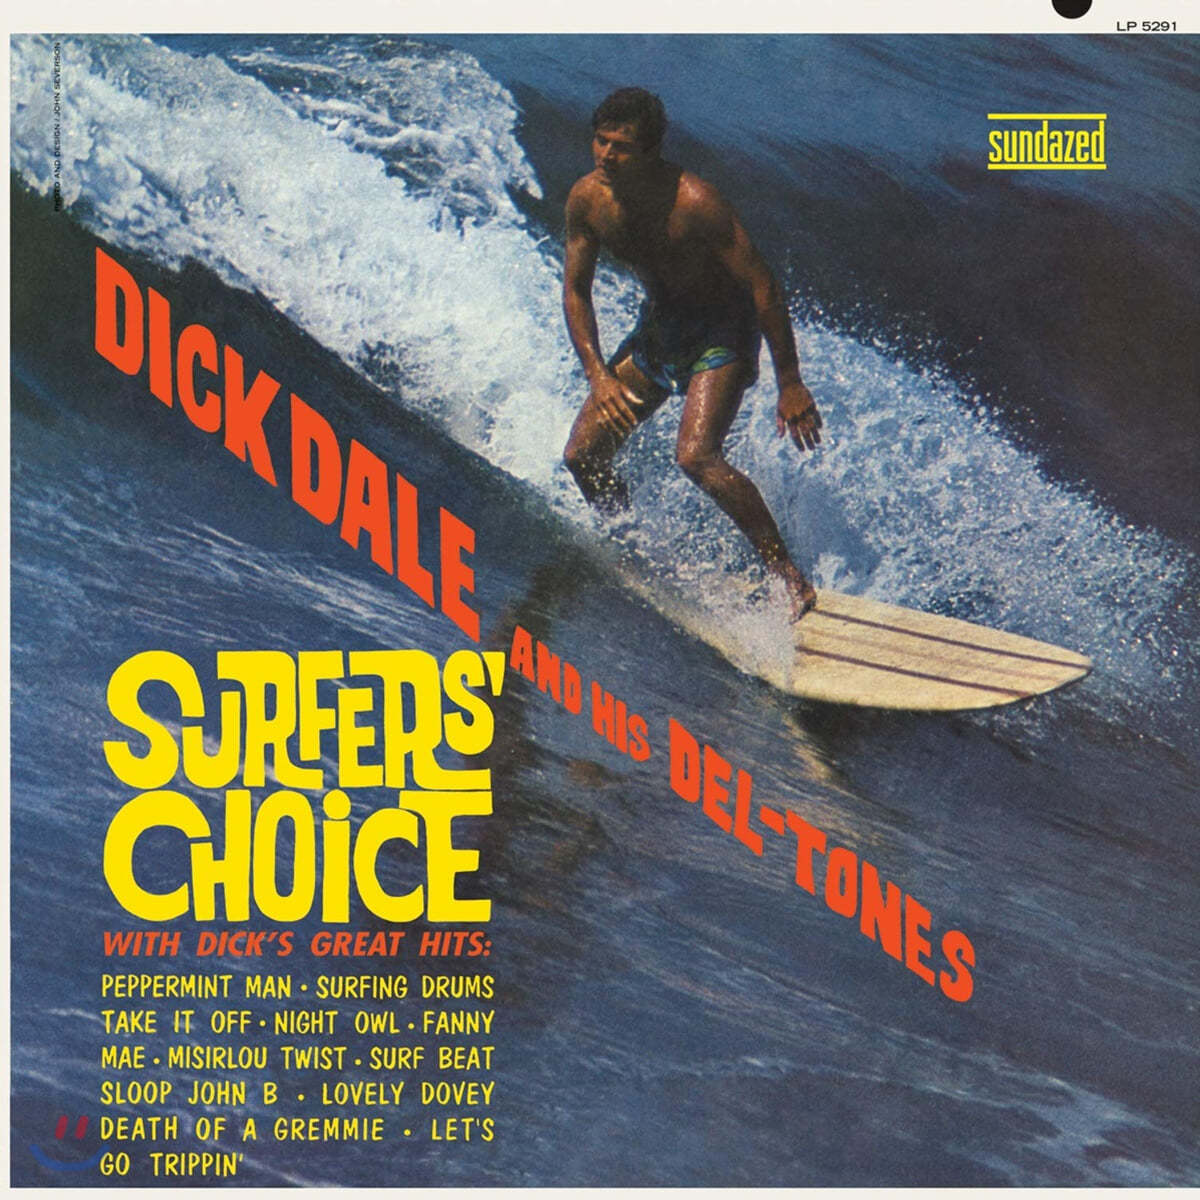 Dick Dale & His Del-Tones (딕 데일 앤 히스 델 톤스) - 1집 Surfers' Choice [골드 컬러 LP]